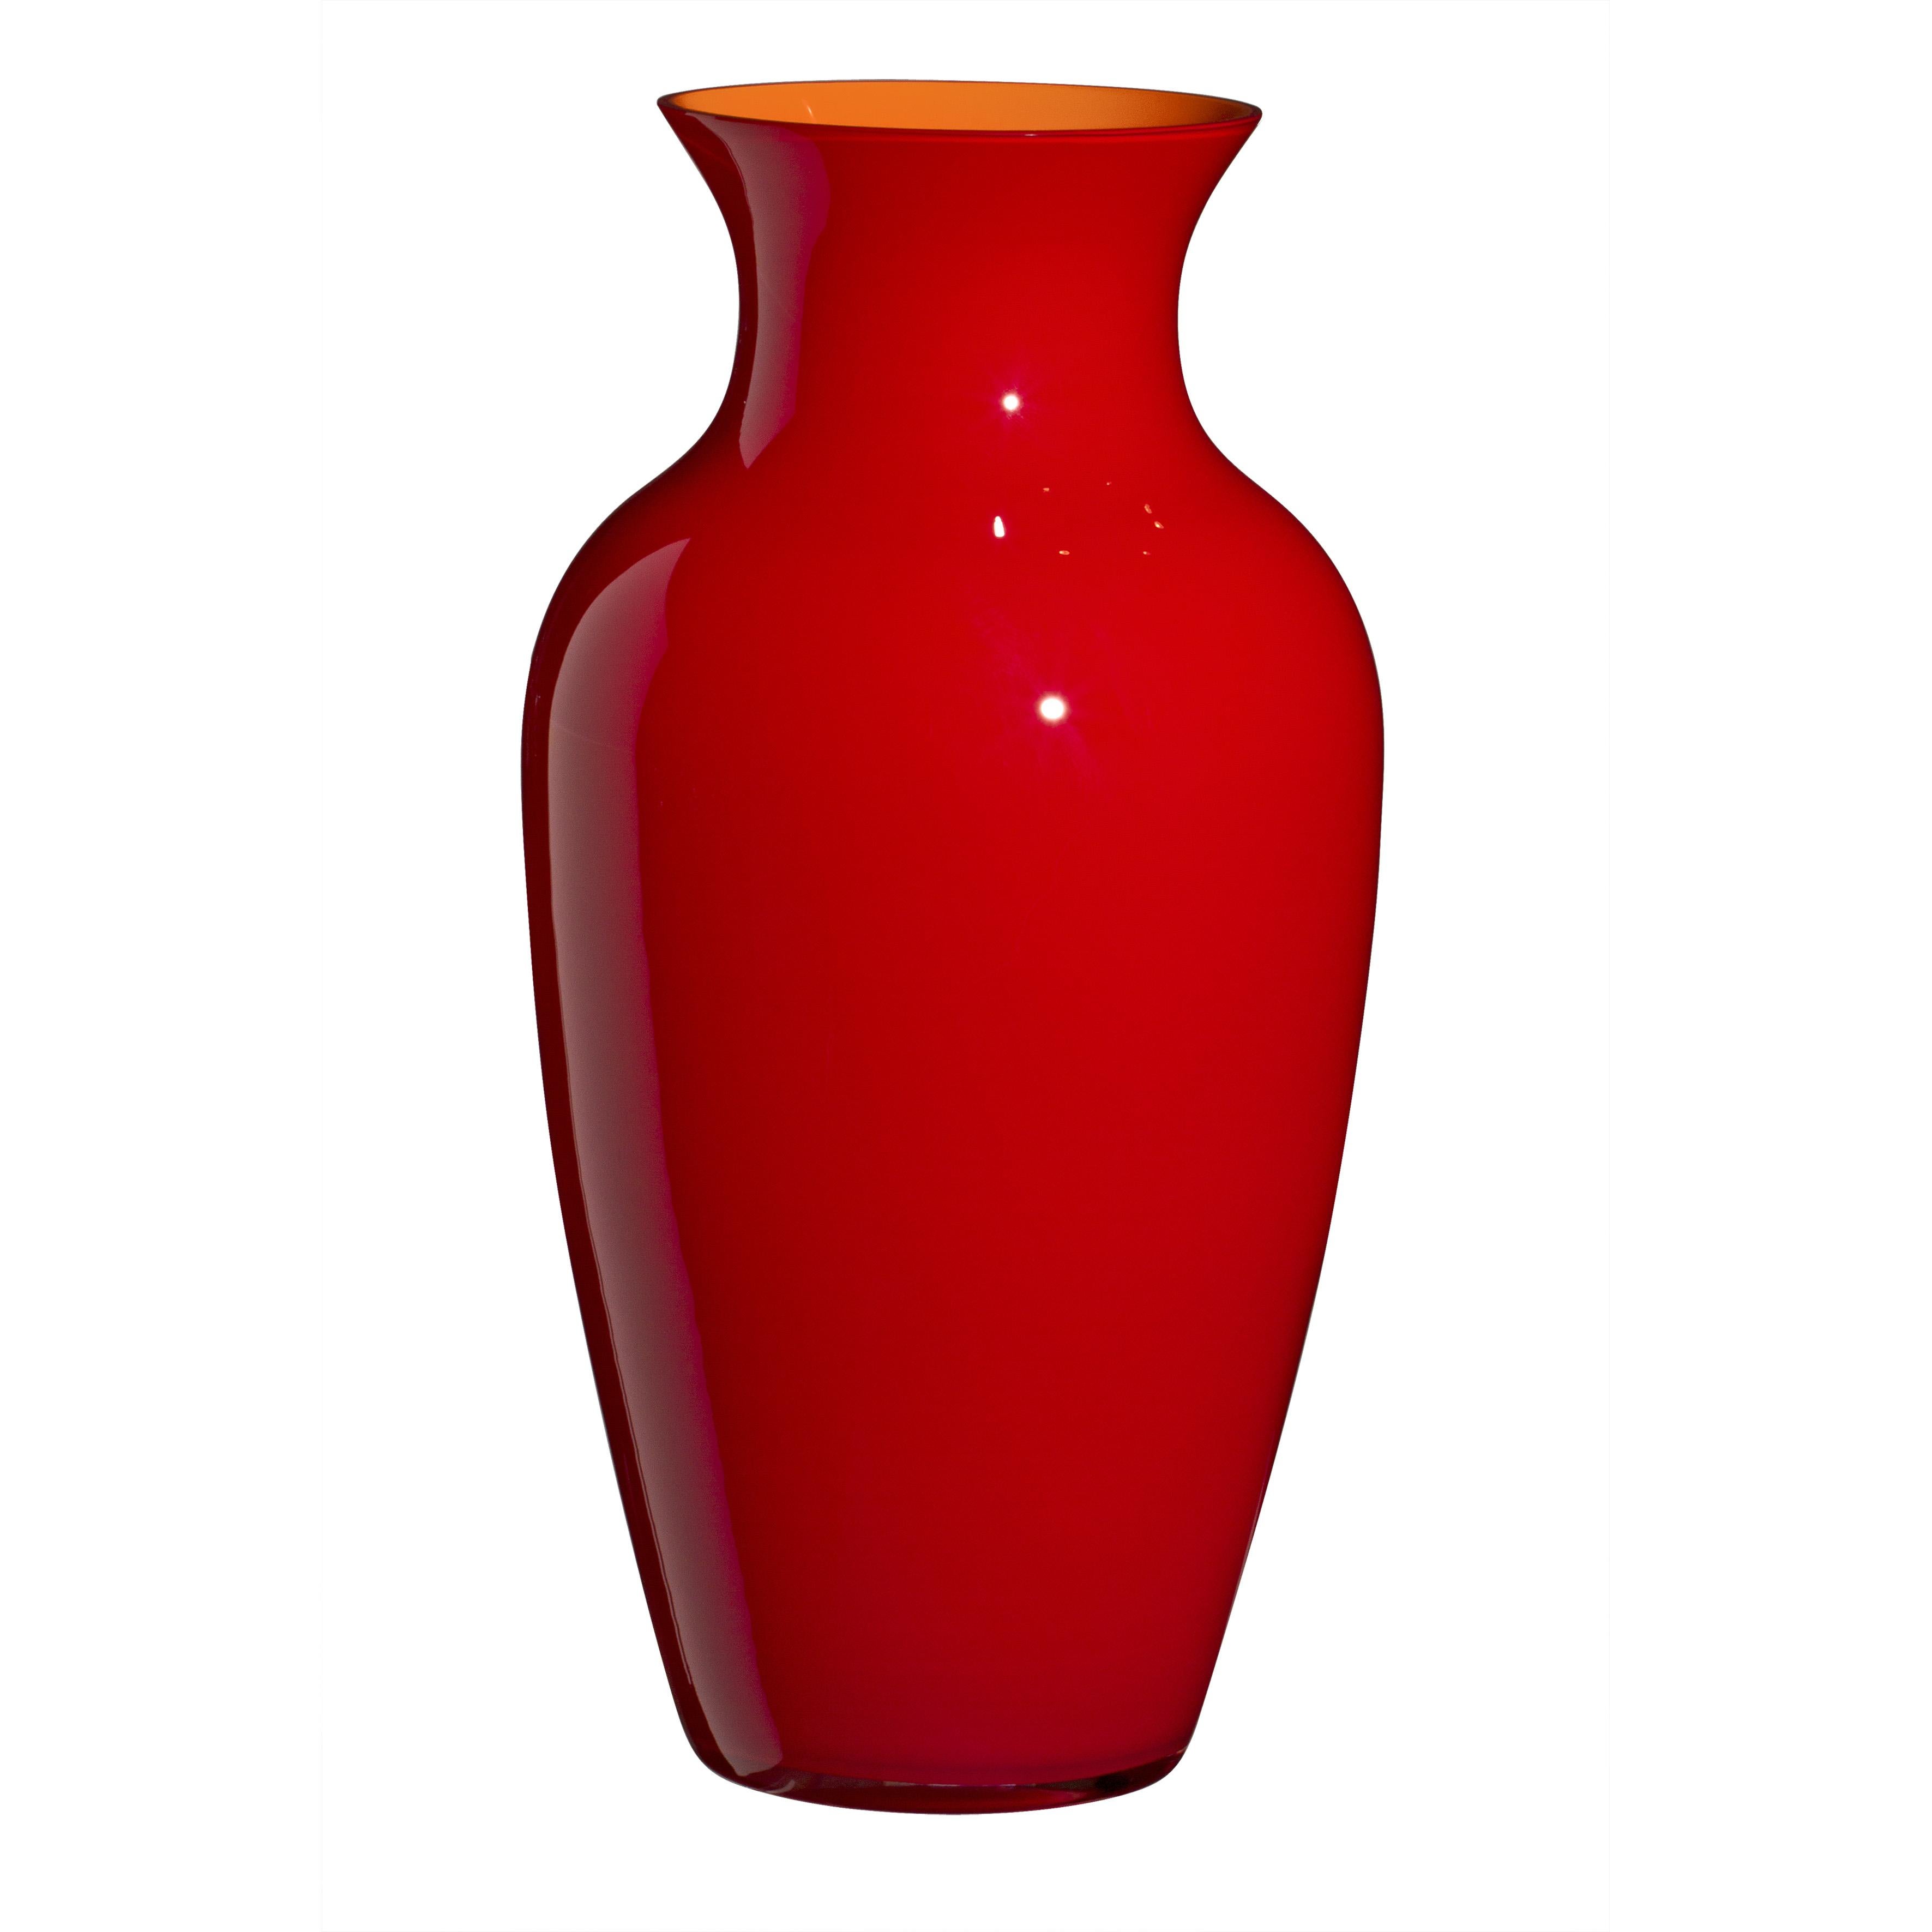 Grand vase I Cinesi rouge vif par Carlo Moretti